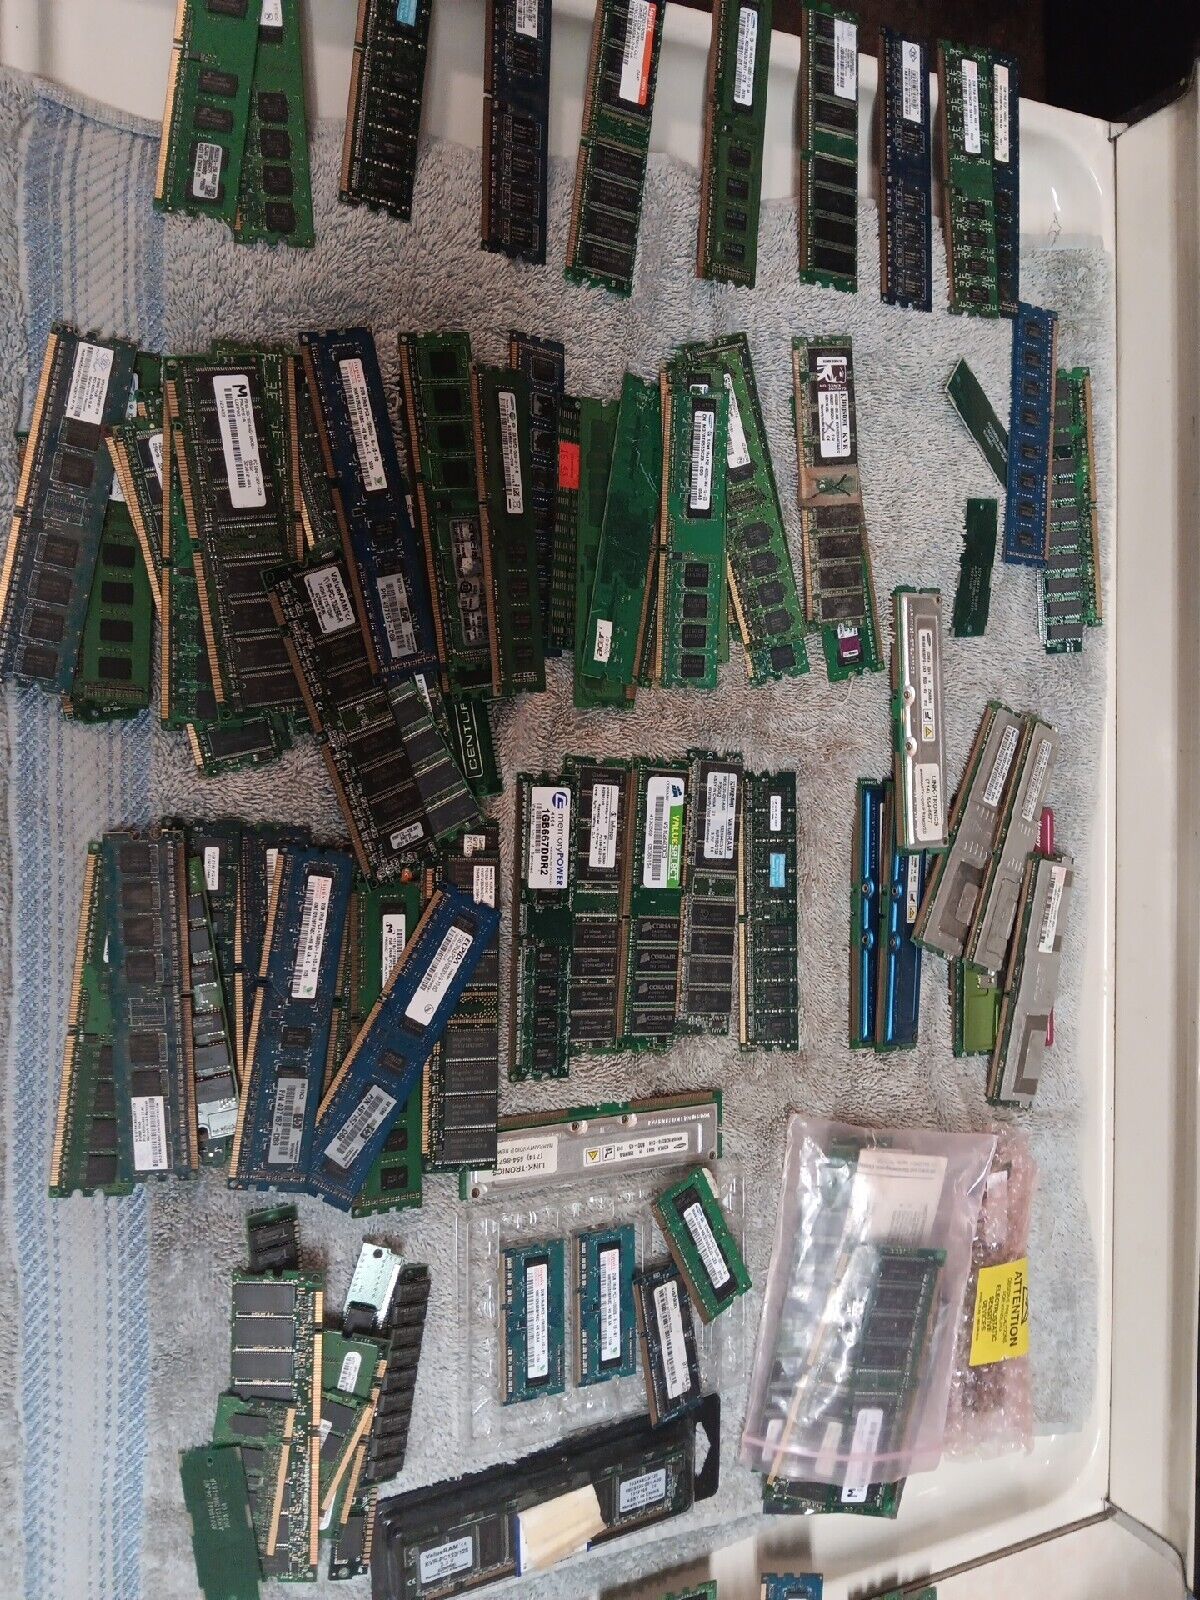 Ram Memory Sticks Appx. 100 Piece Lot Various Random